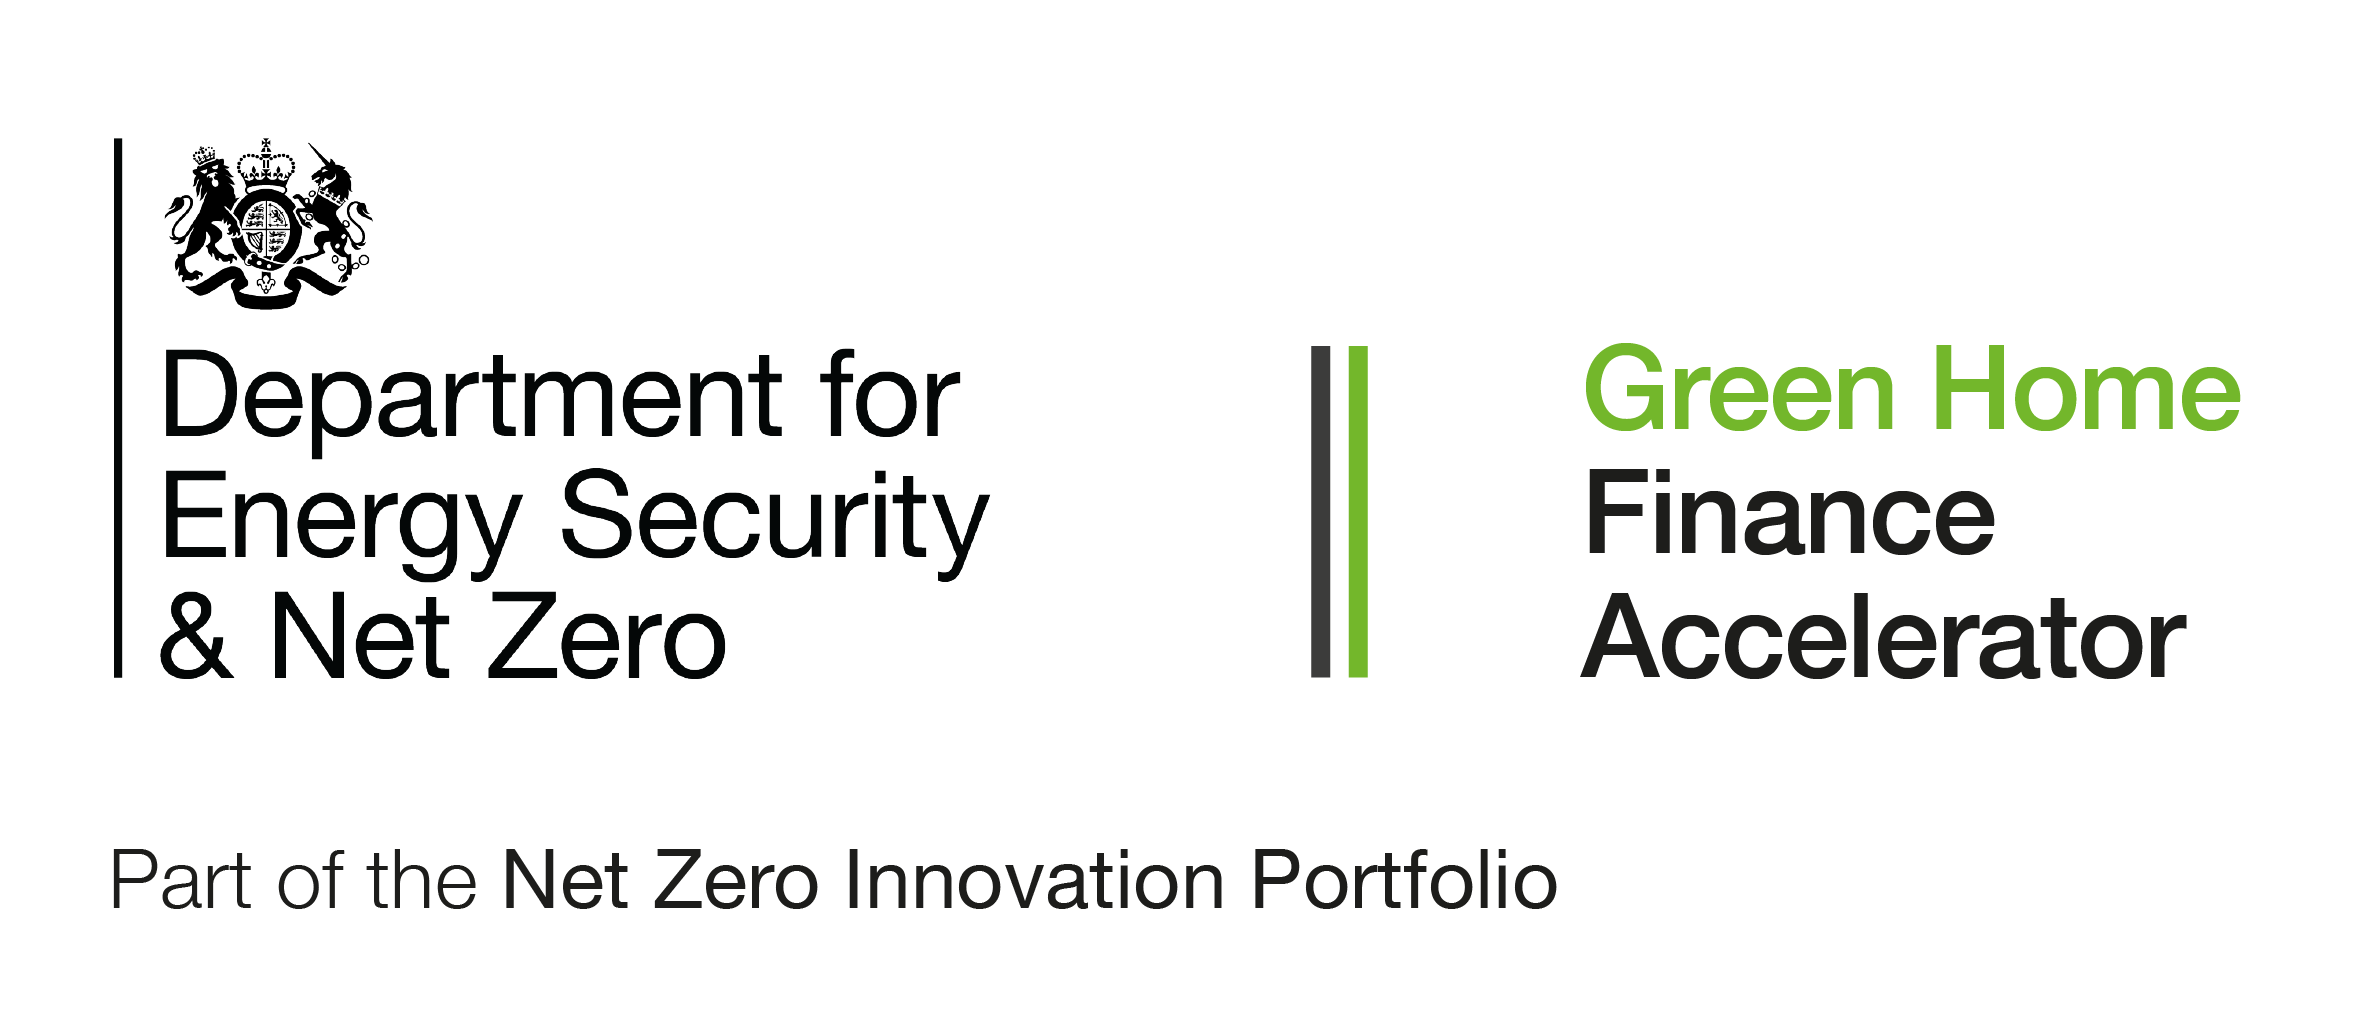 Department for Energy Security & Net Zero, Green Home Finance Accelerator